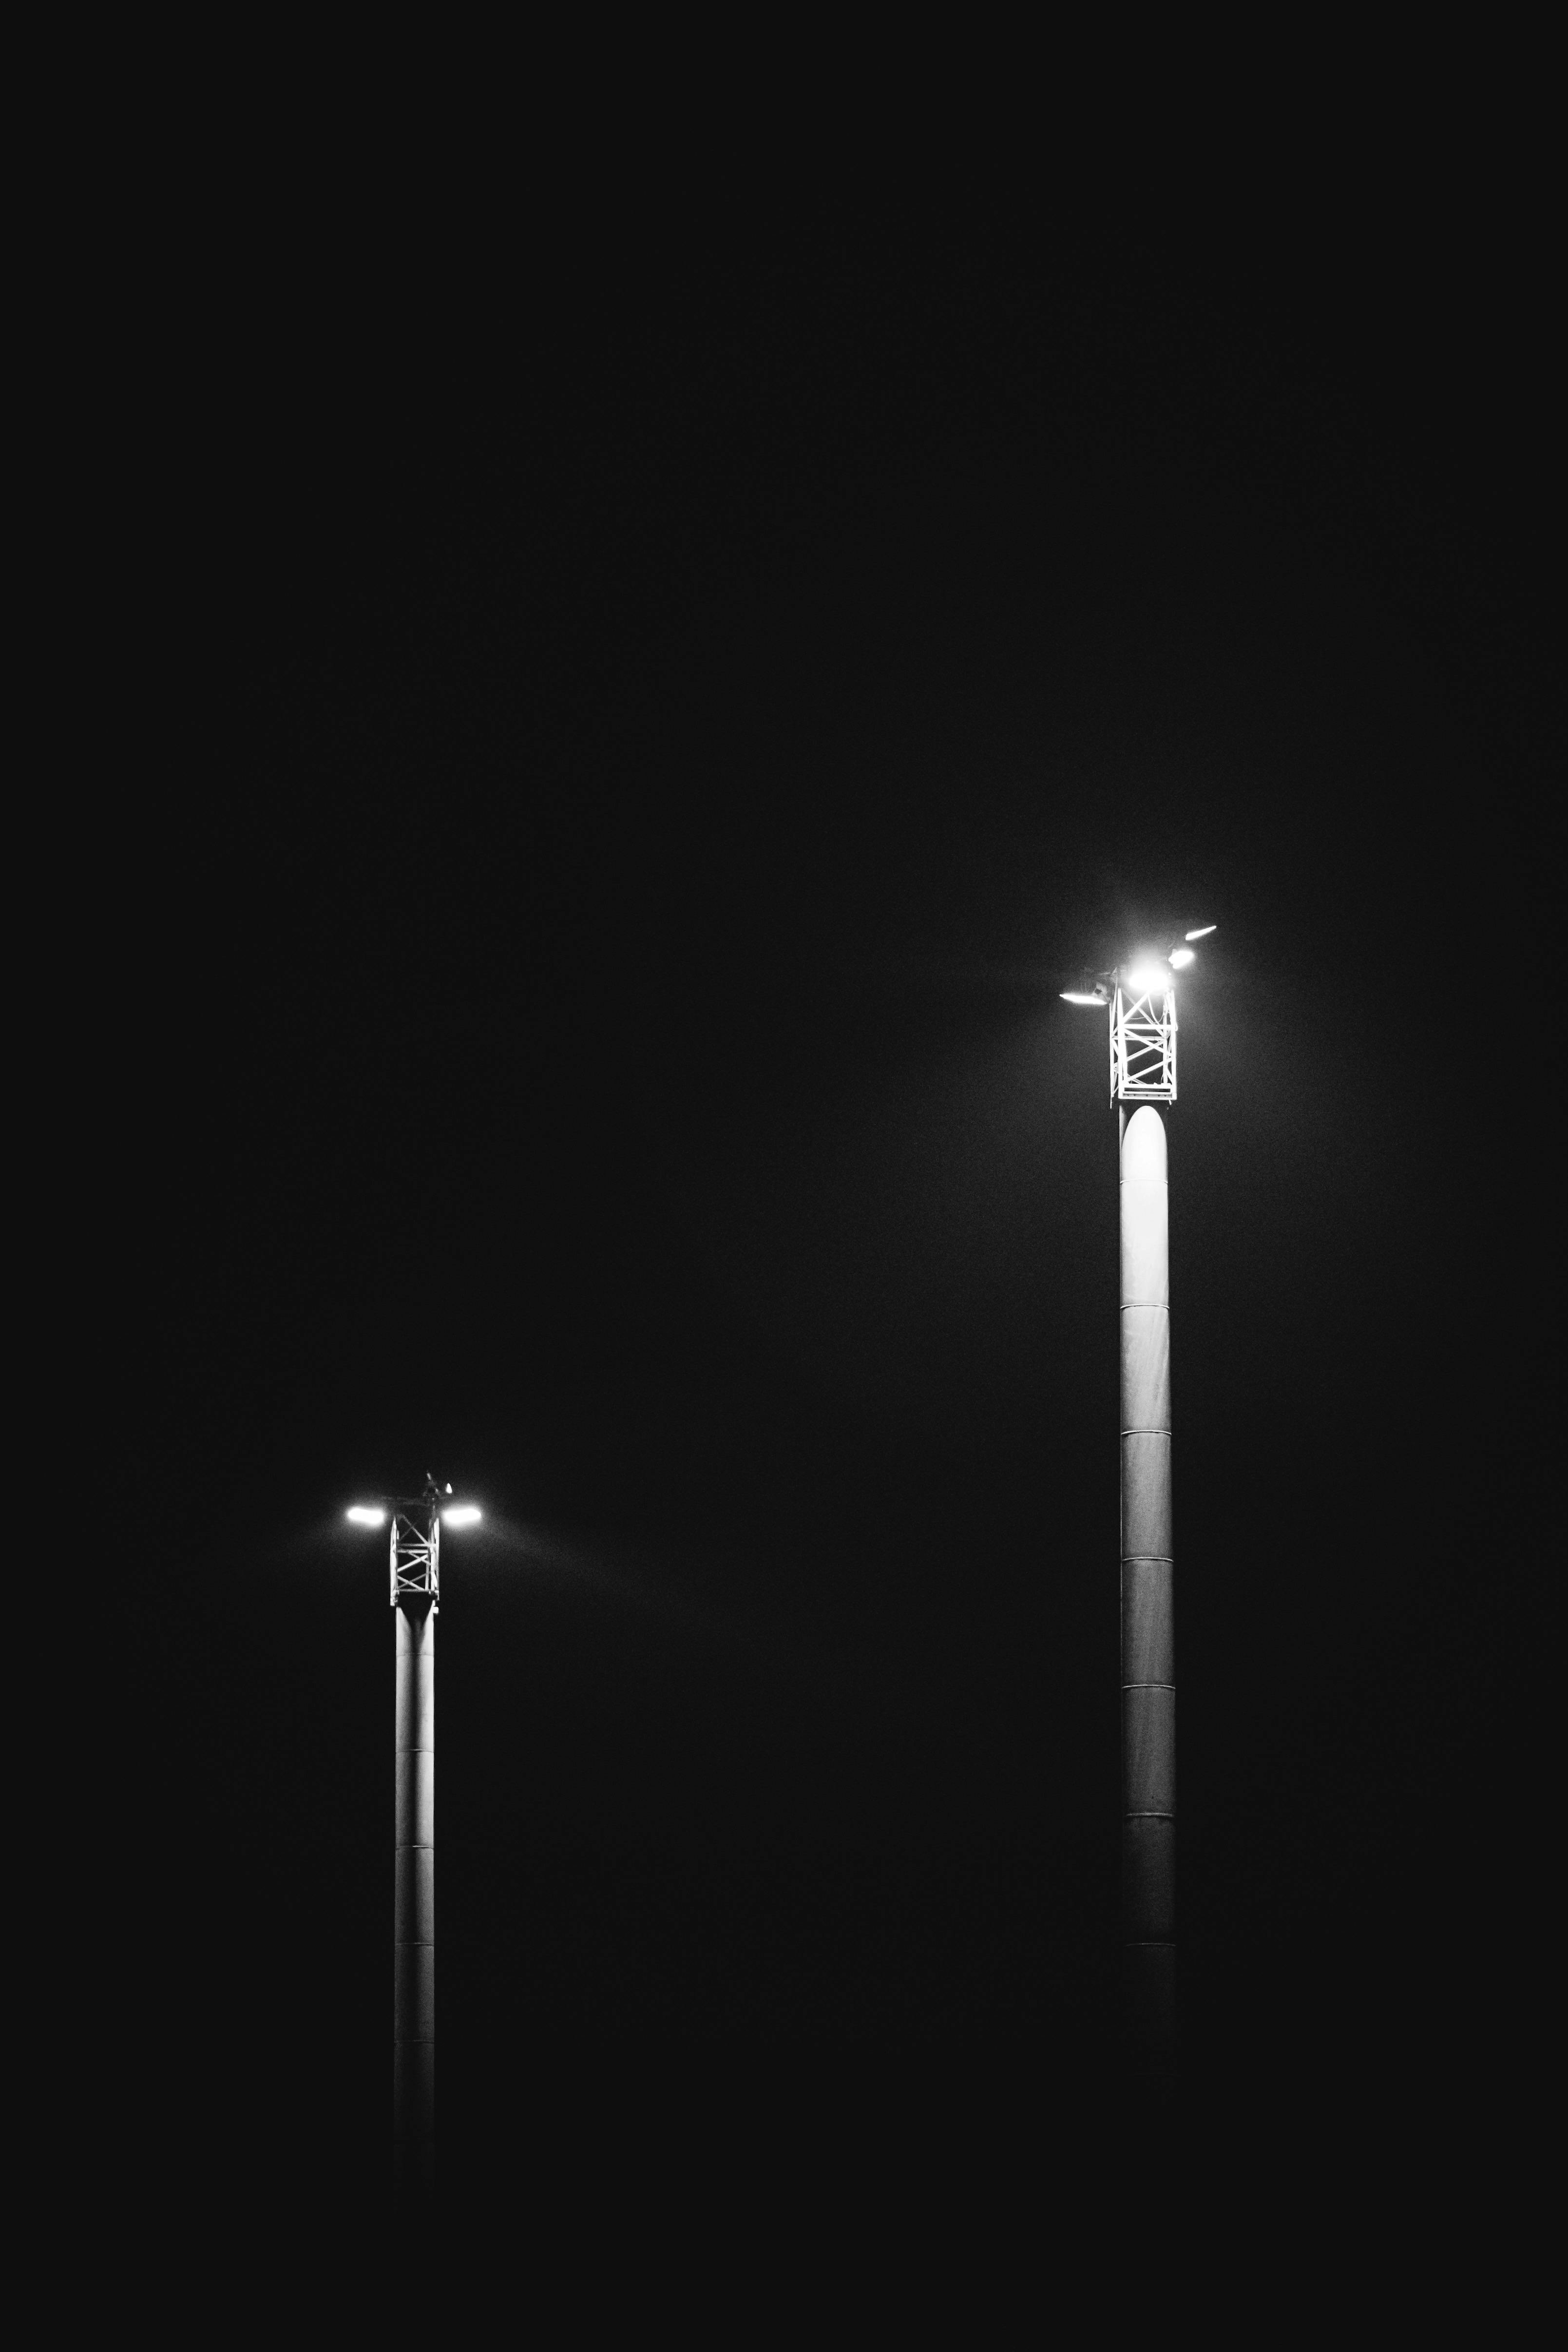 White Lamp Post During Night Time · Free Stock Photo